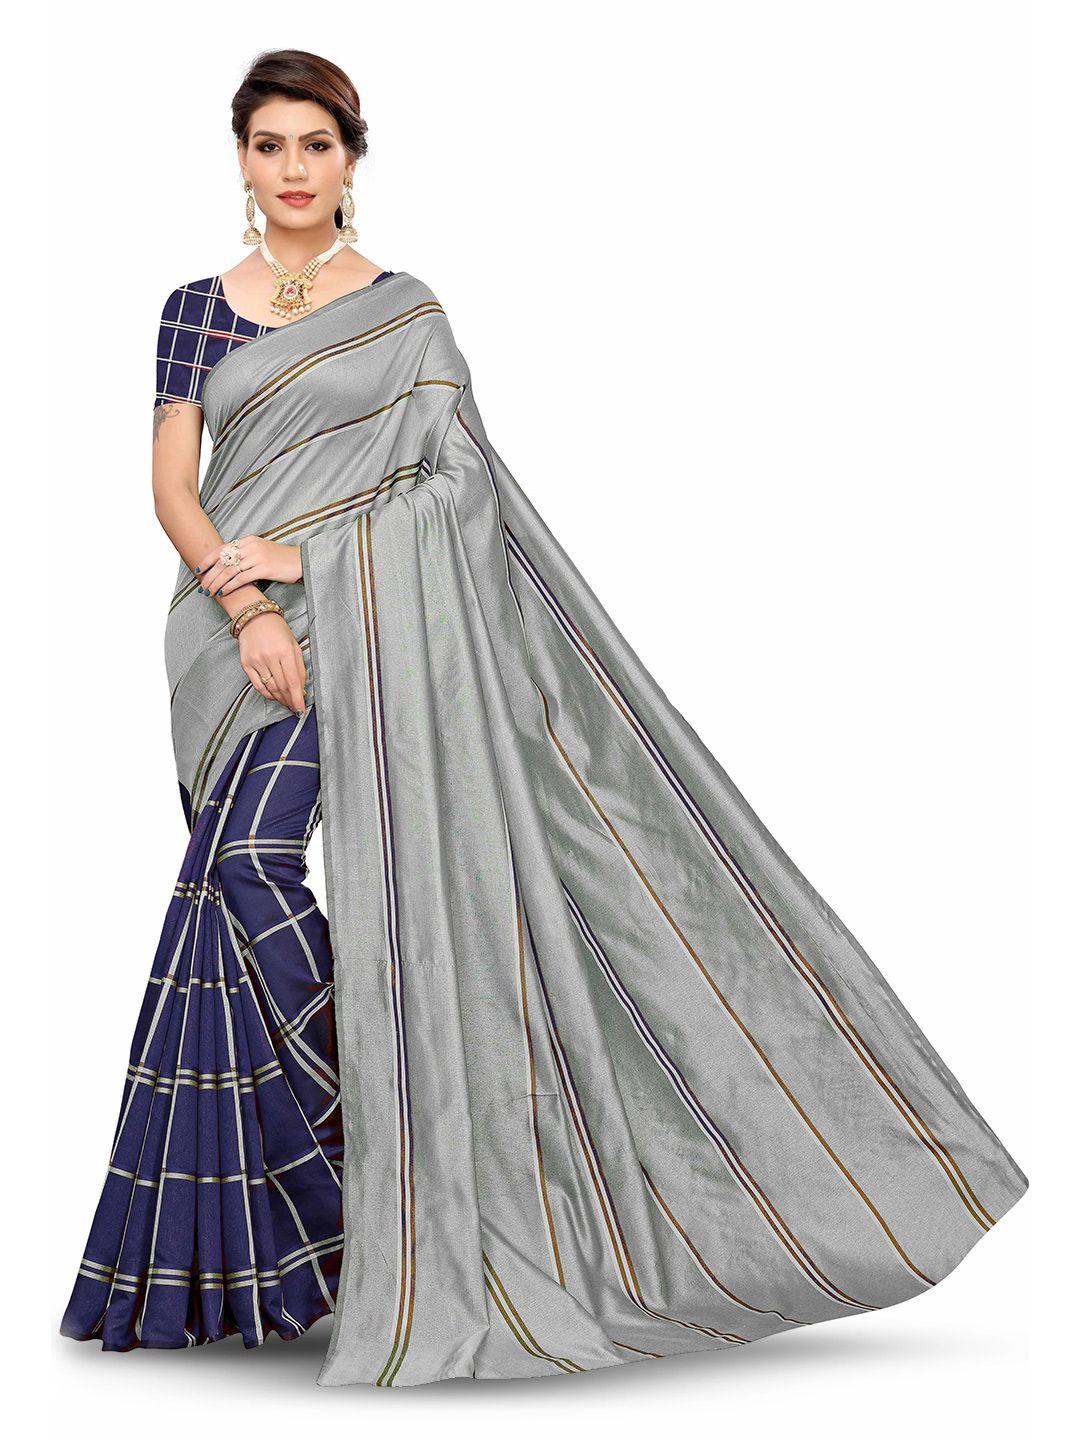 manvaa blue & grey striped half and half banarasi saree